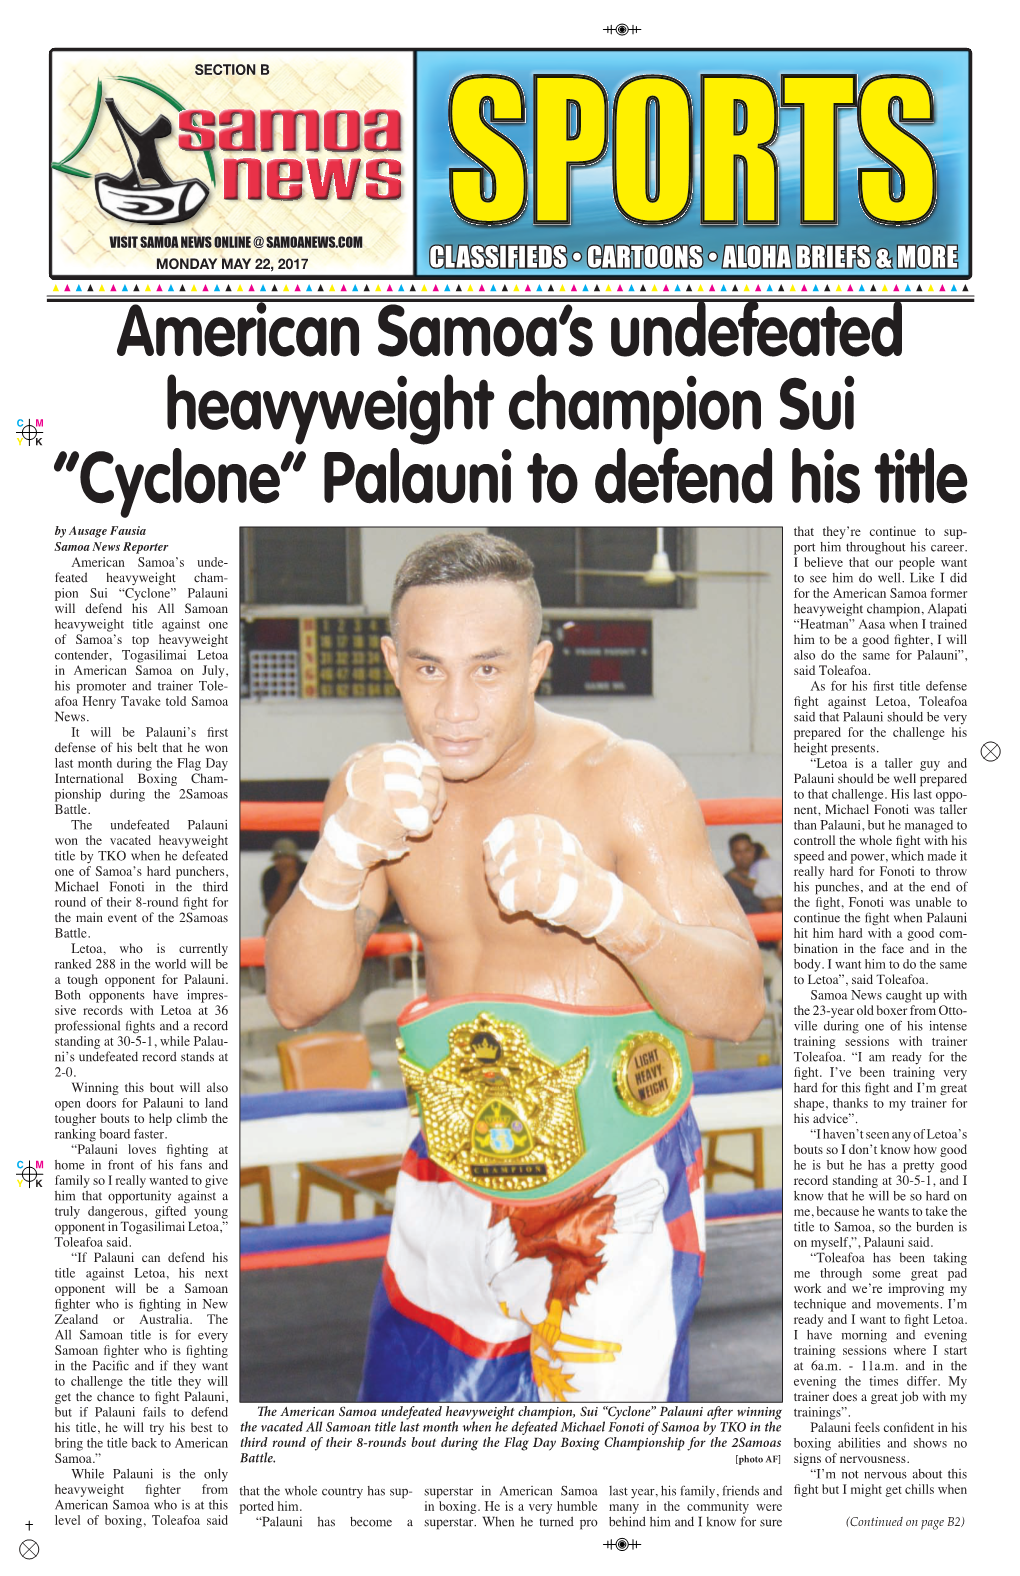 American Samoa's Undefeated Heavyweight